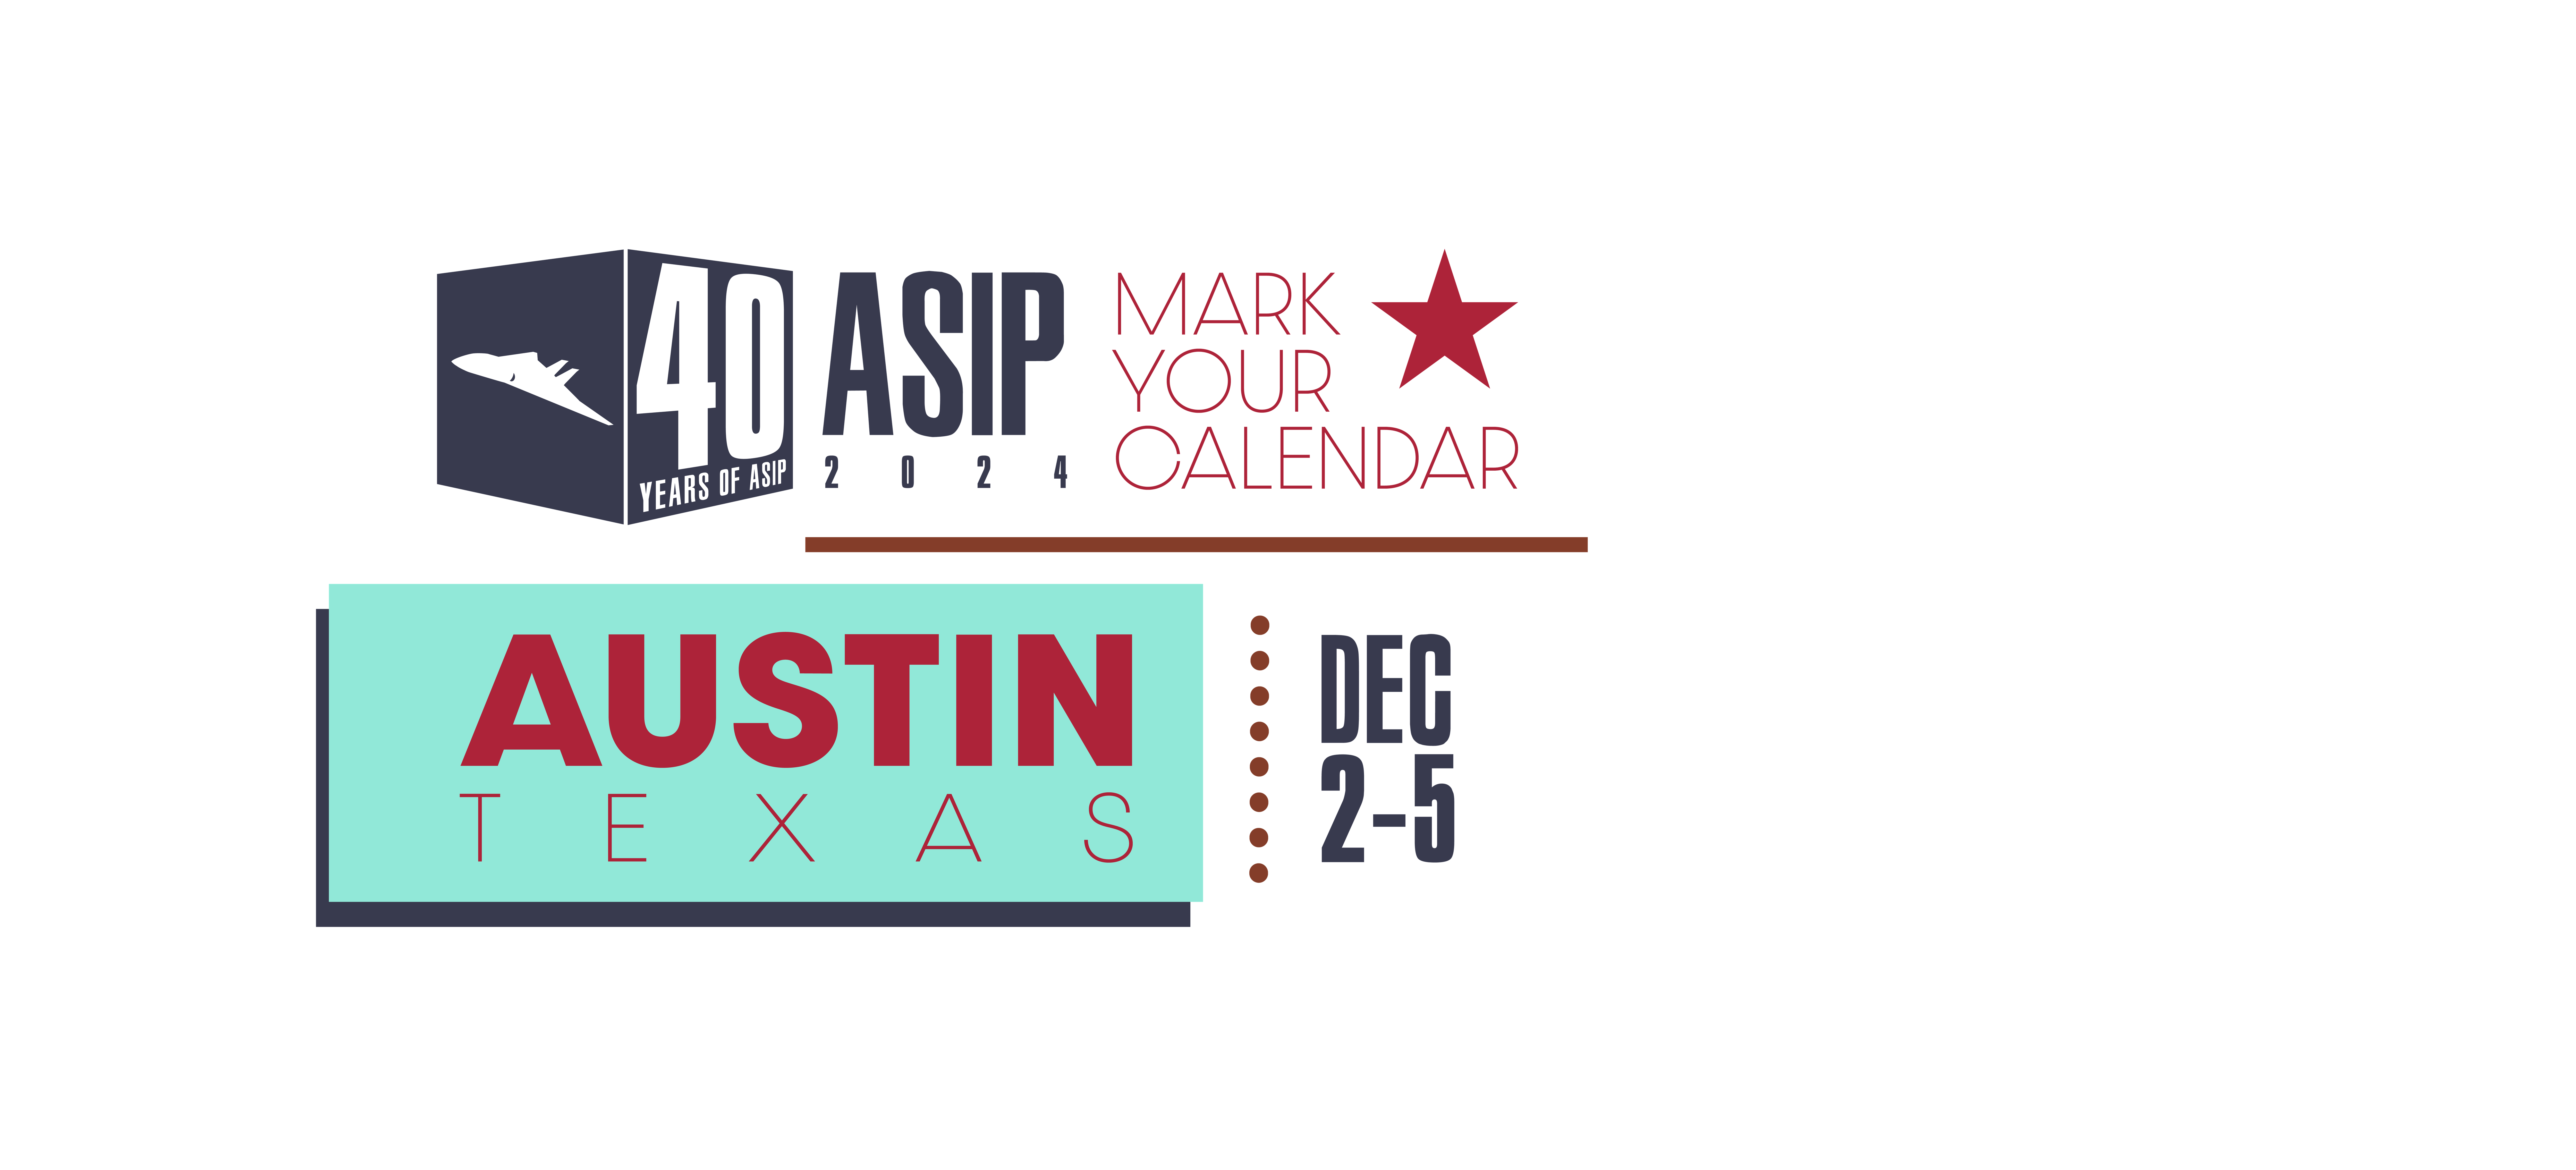 Mark Your Calendar for 2024 // Austin, TX // Dec. 2-5, 2024 